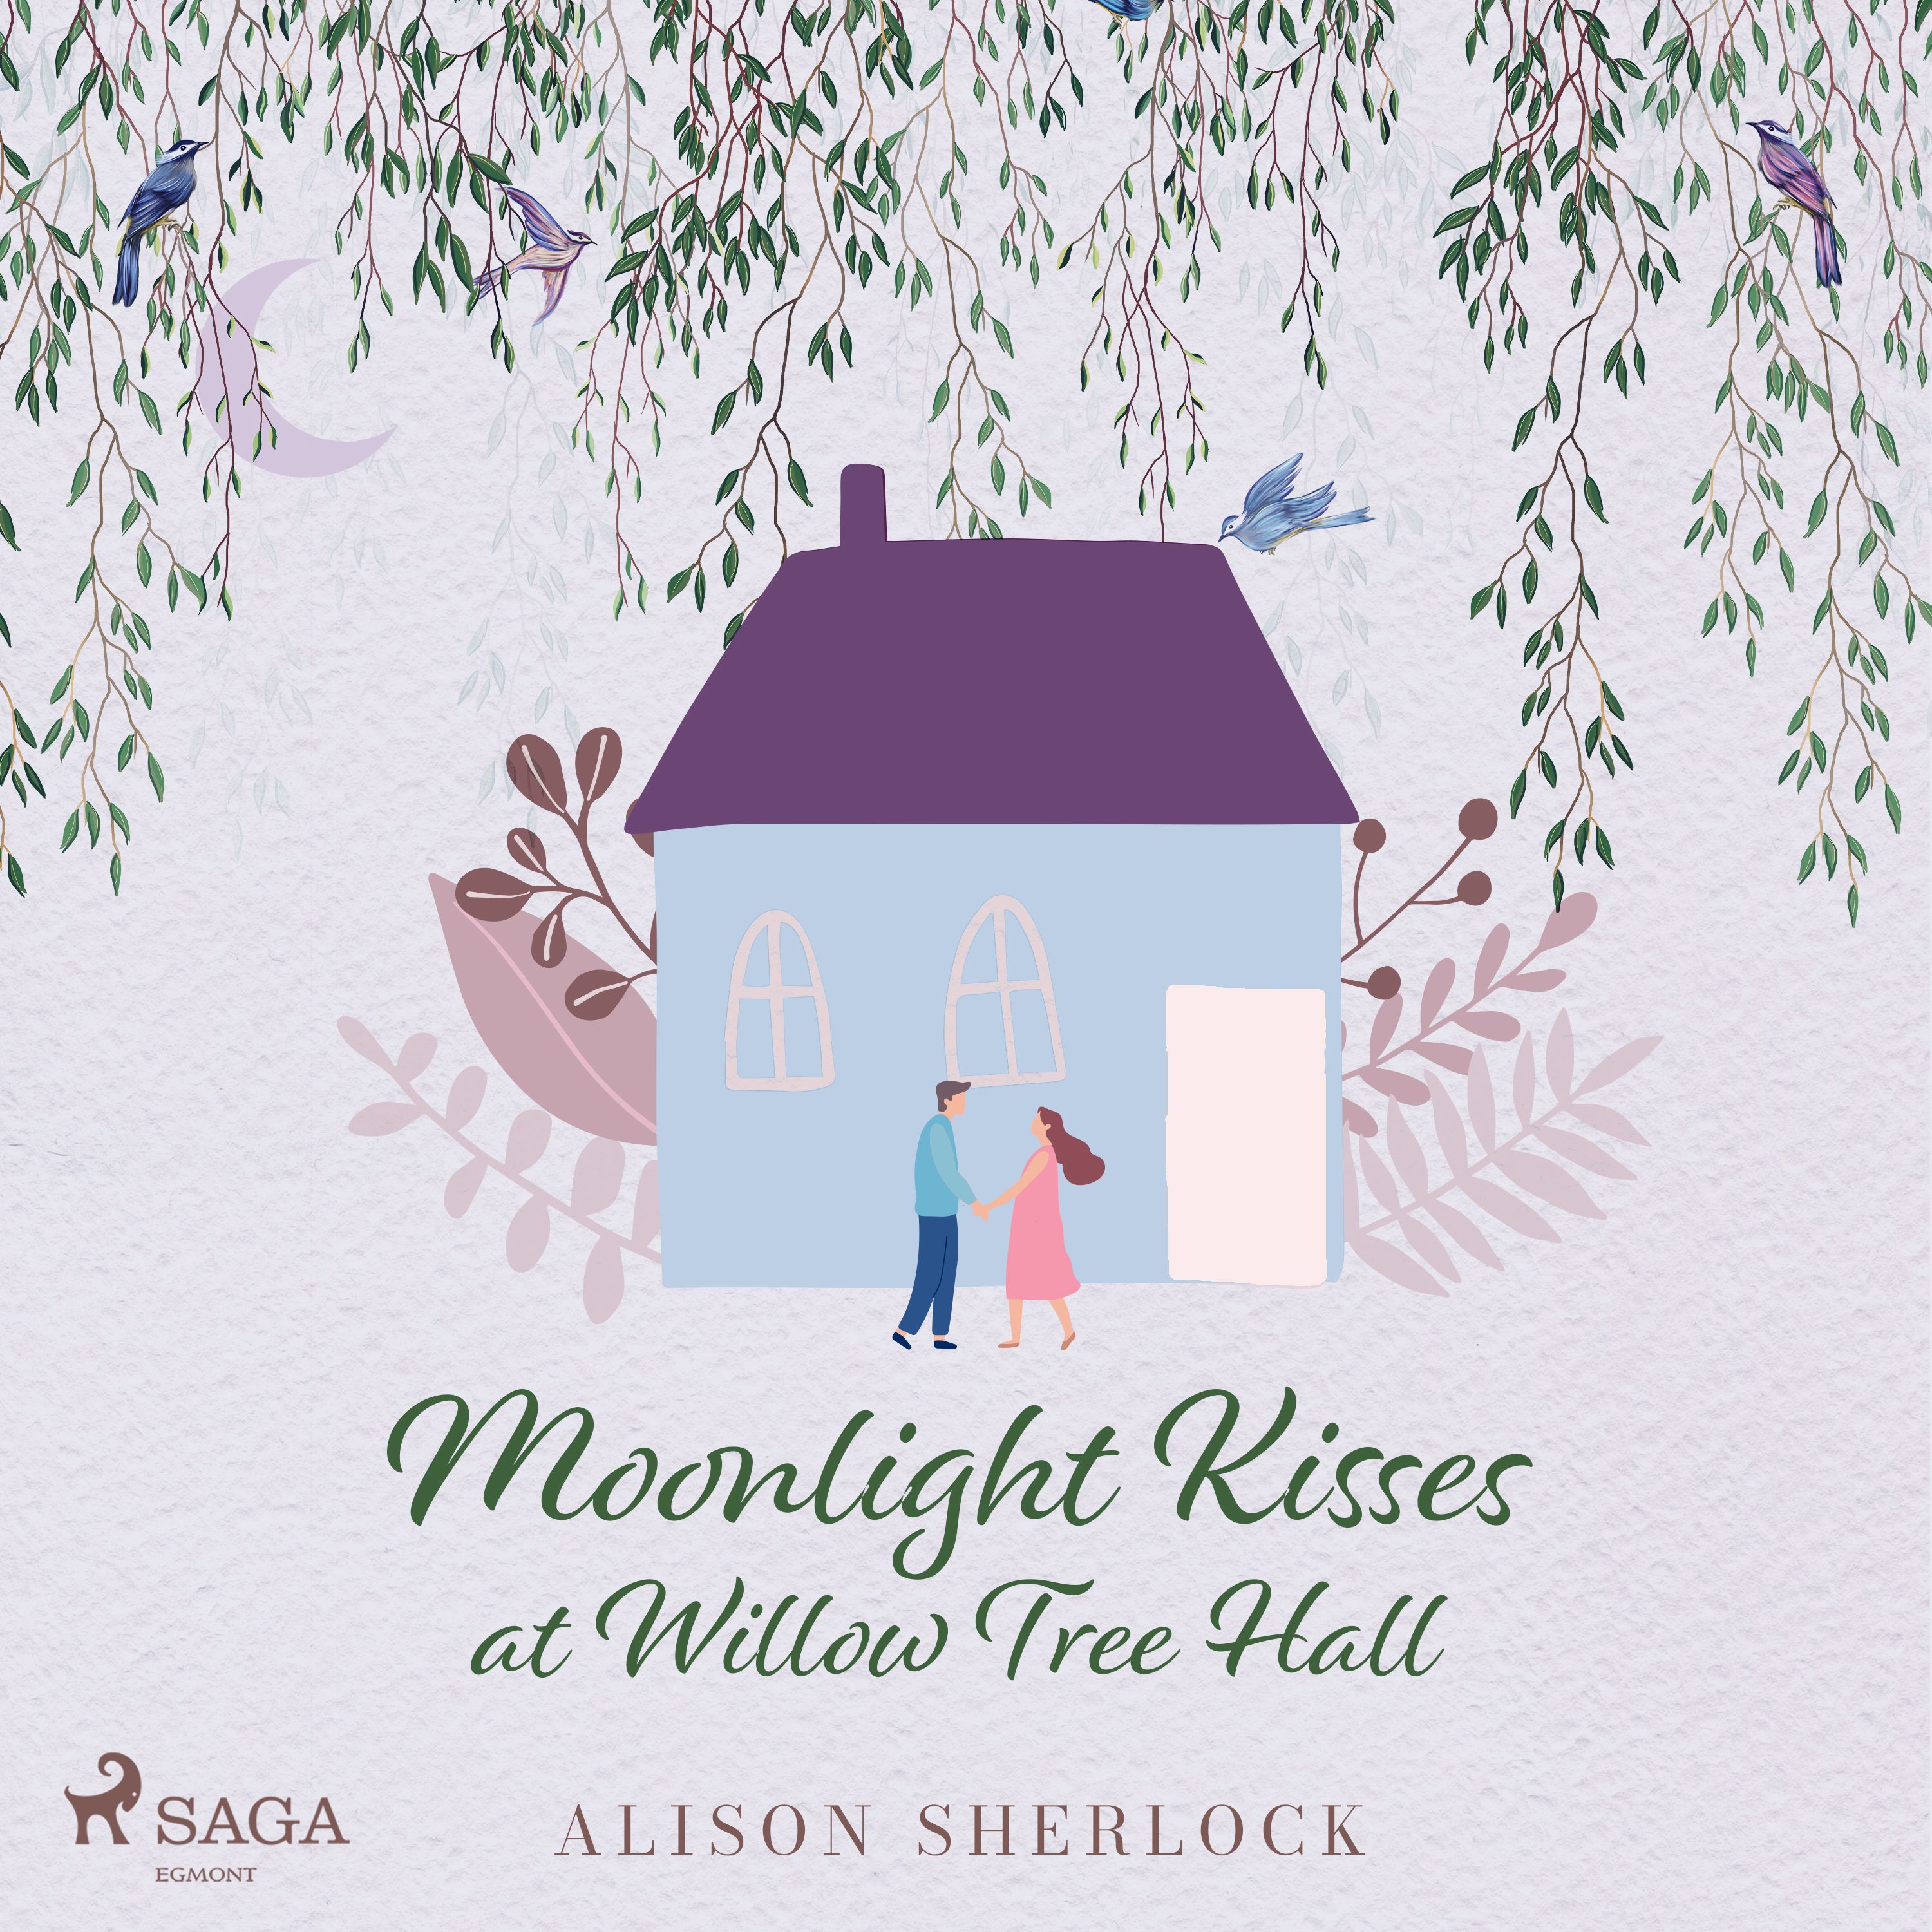 Moonlight Kisses at Willow Tree Hall, lydbog af Alison Sherlock